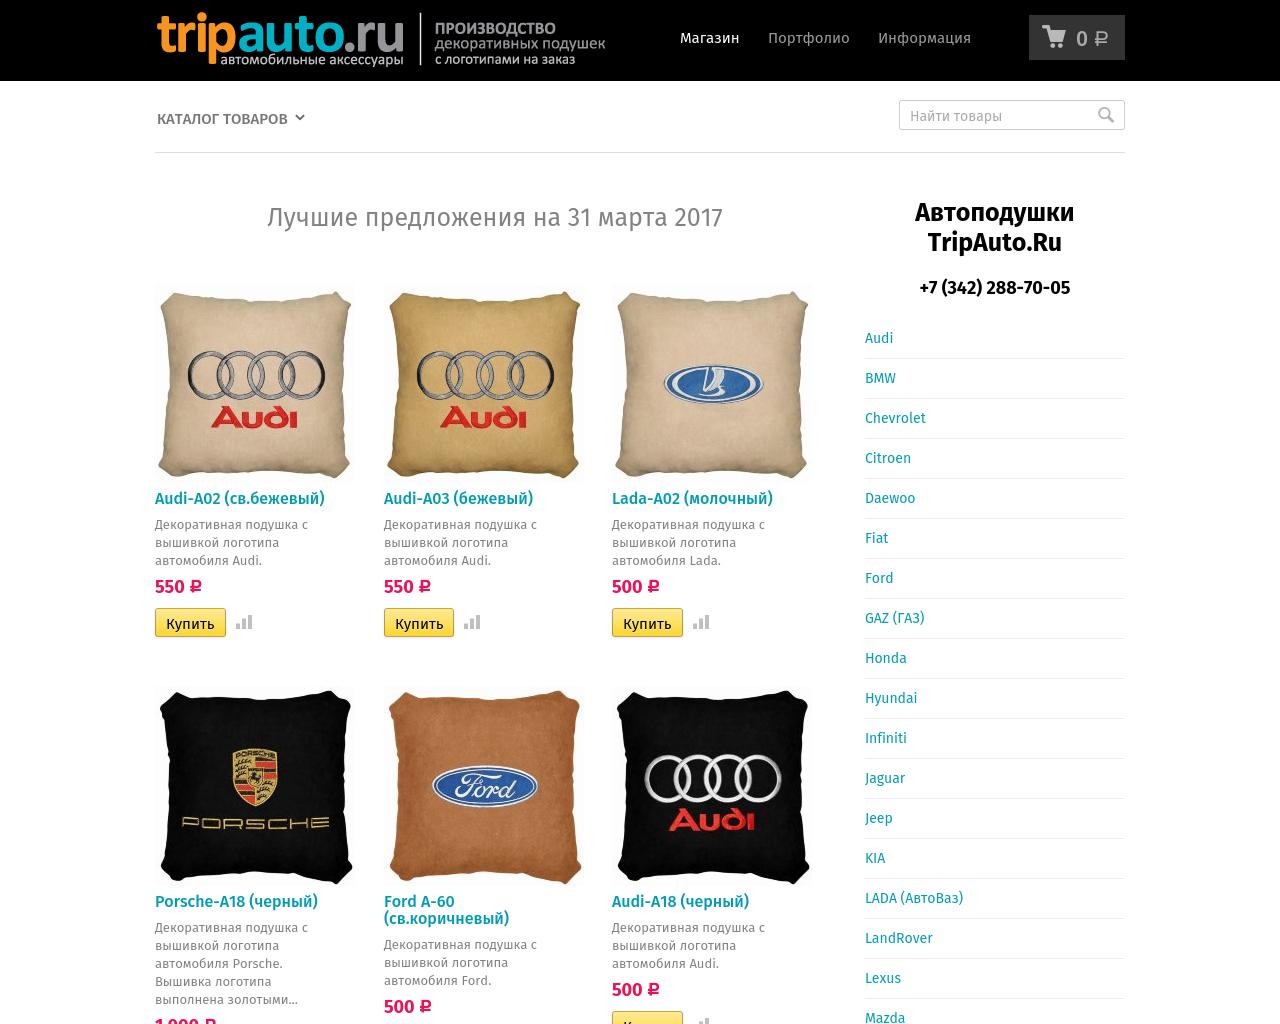 Изображение сайта tripauto.ru в разрешении 1280x1024